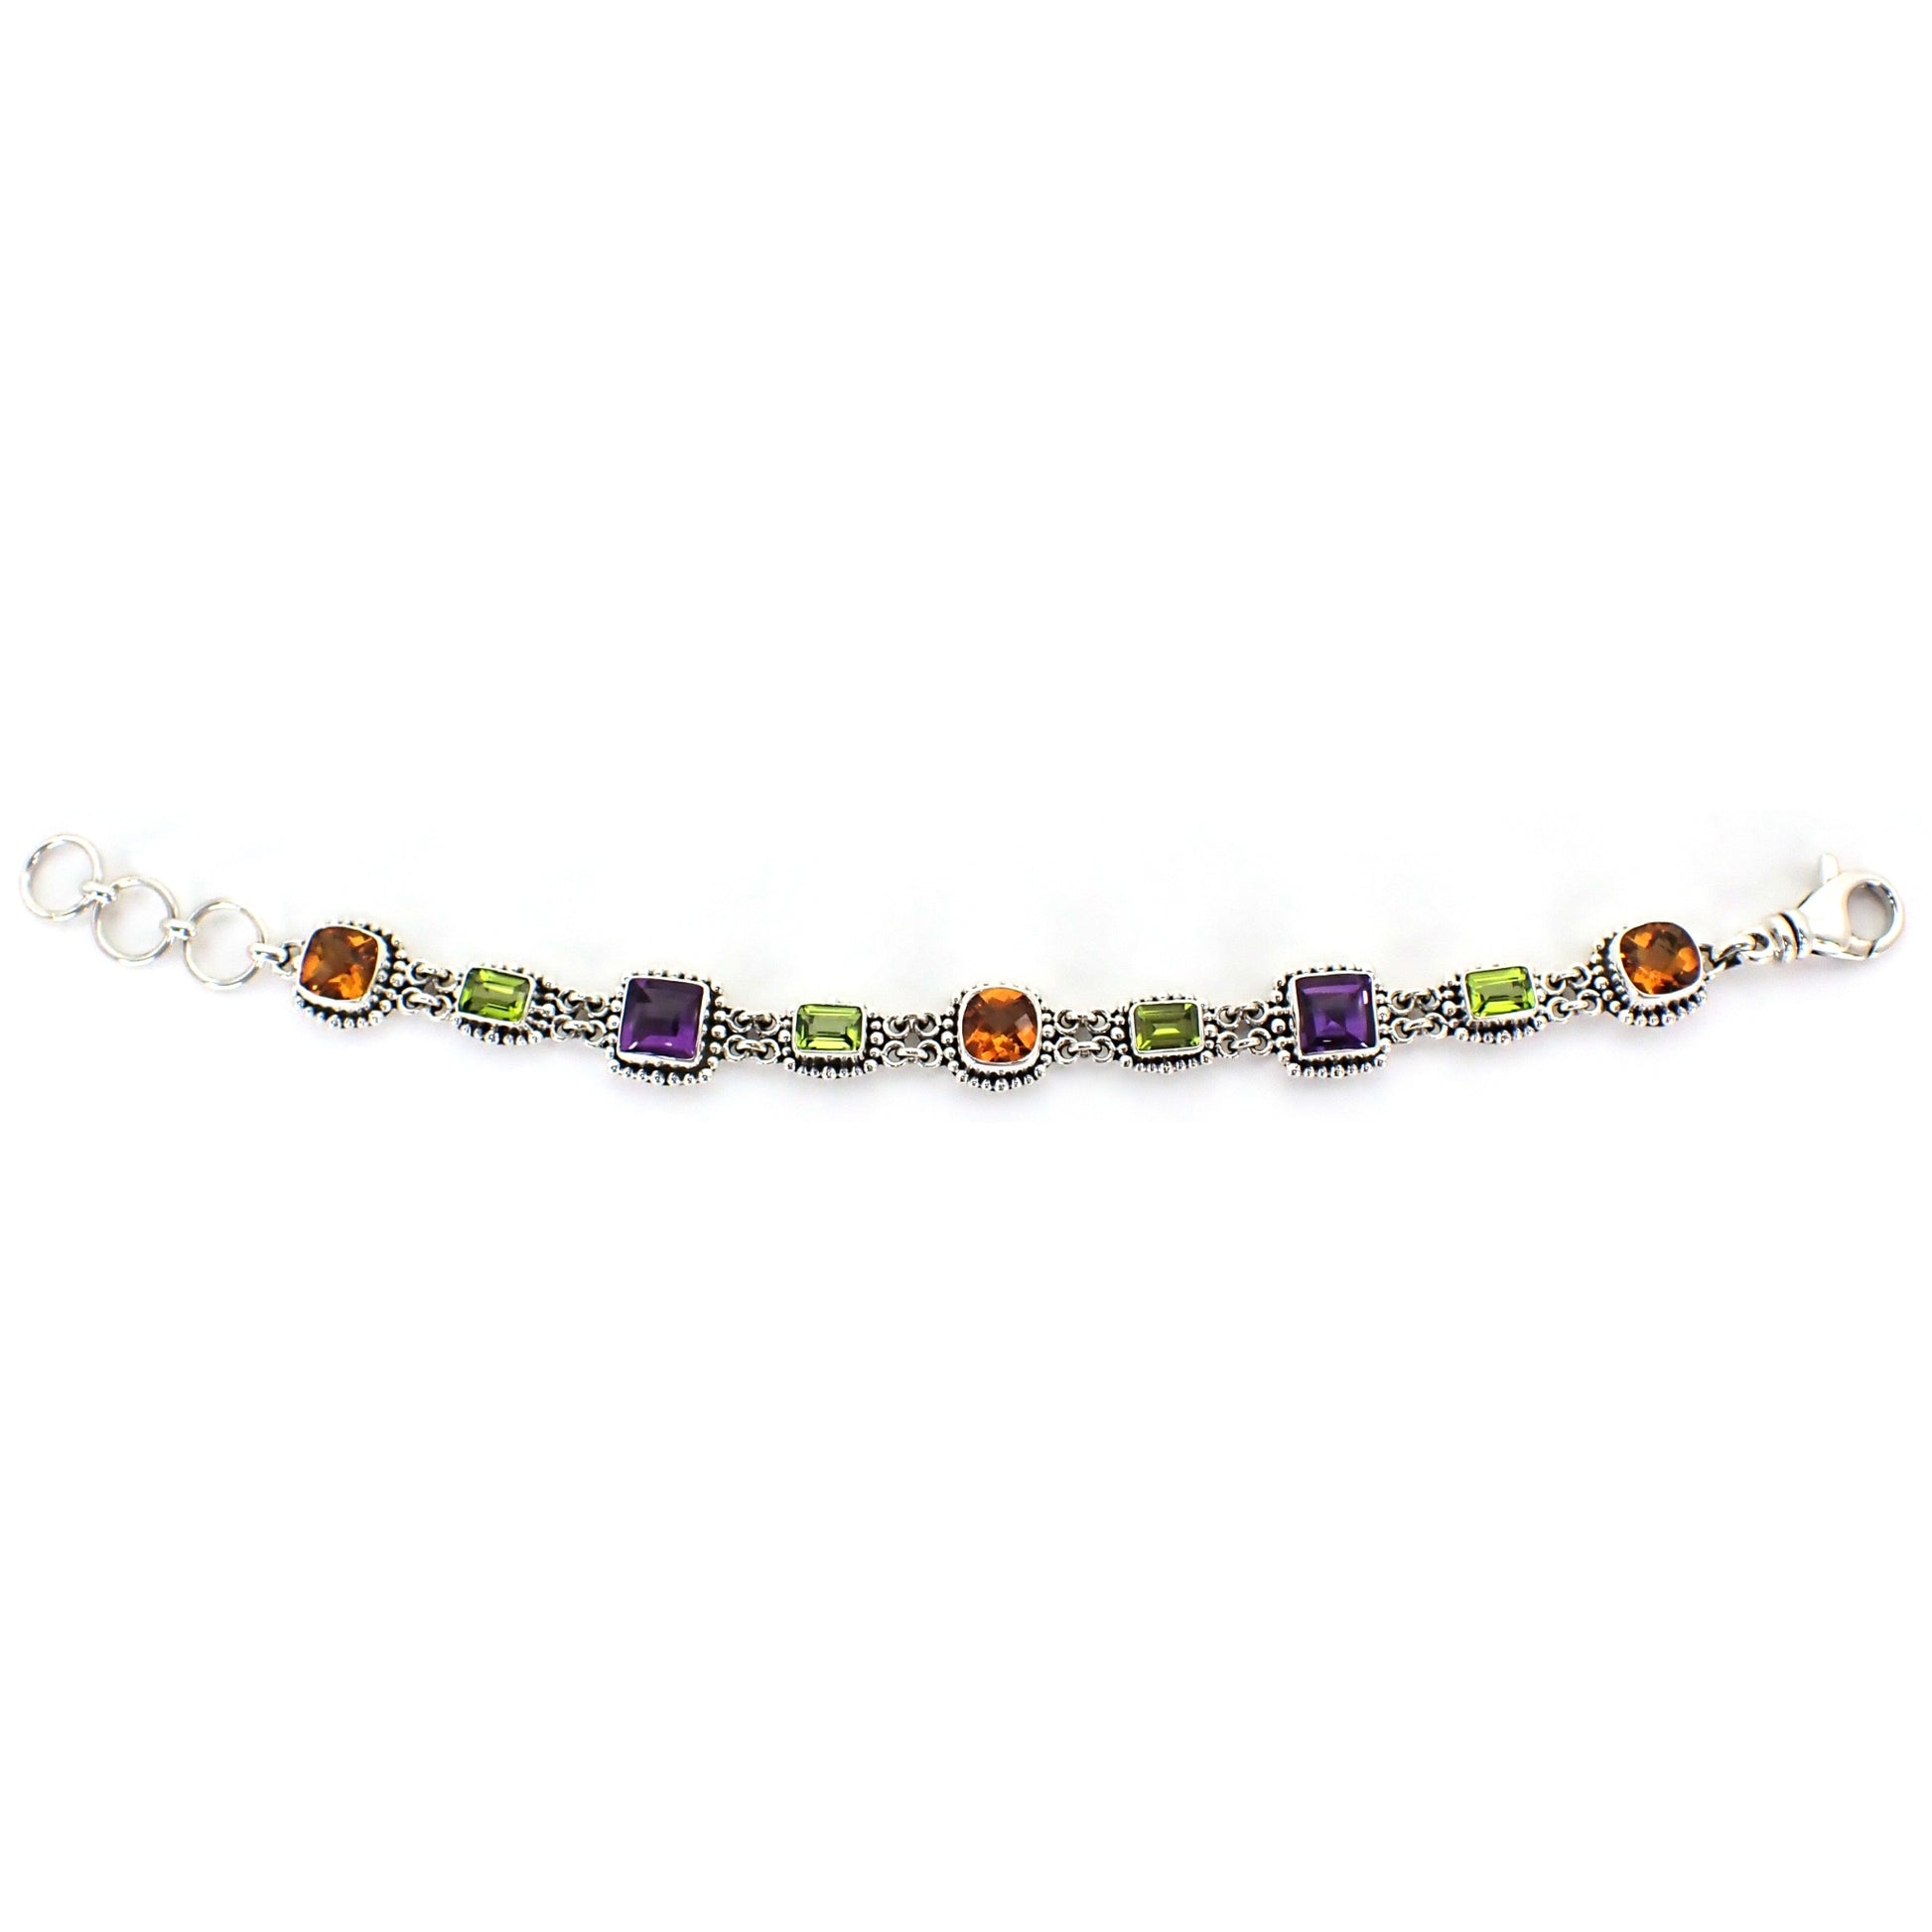 Multi-gemstone link bracelet with citrine, purple amethyst, and green peridot gemstones.